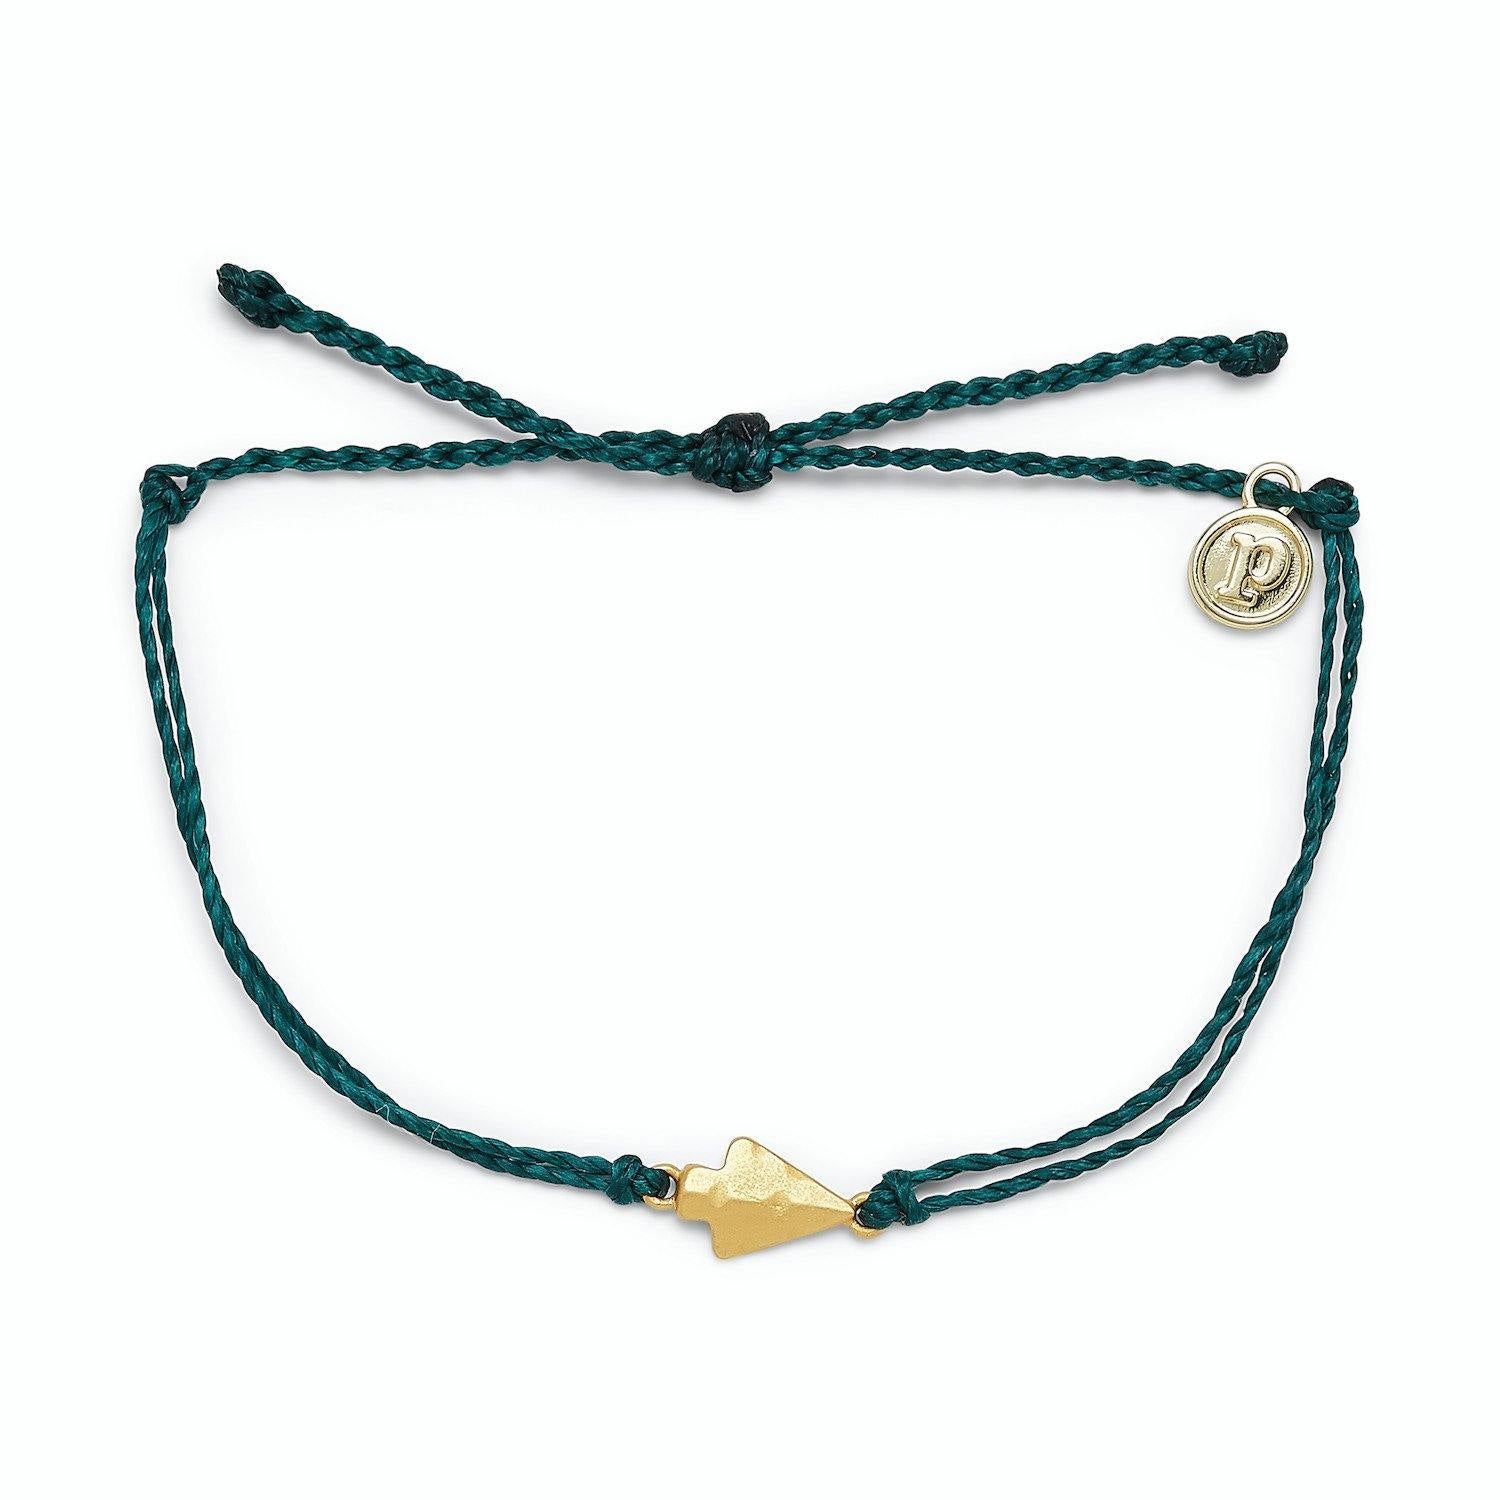 Antique Arrow Head Bracelet - The Salty Mare